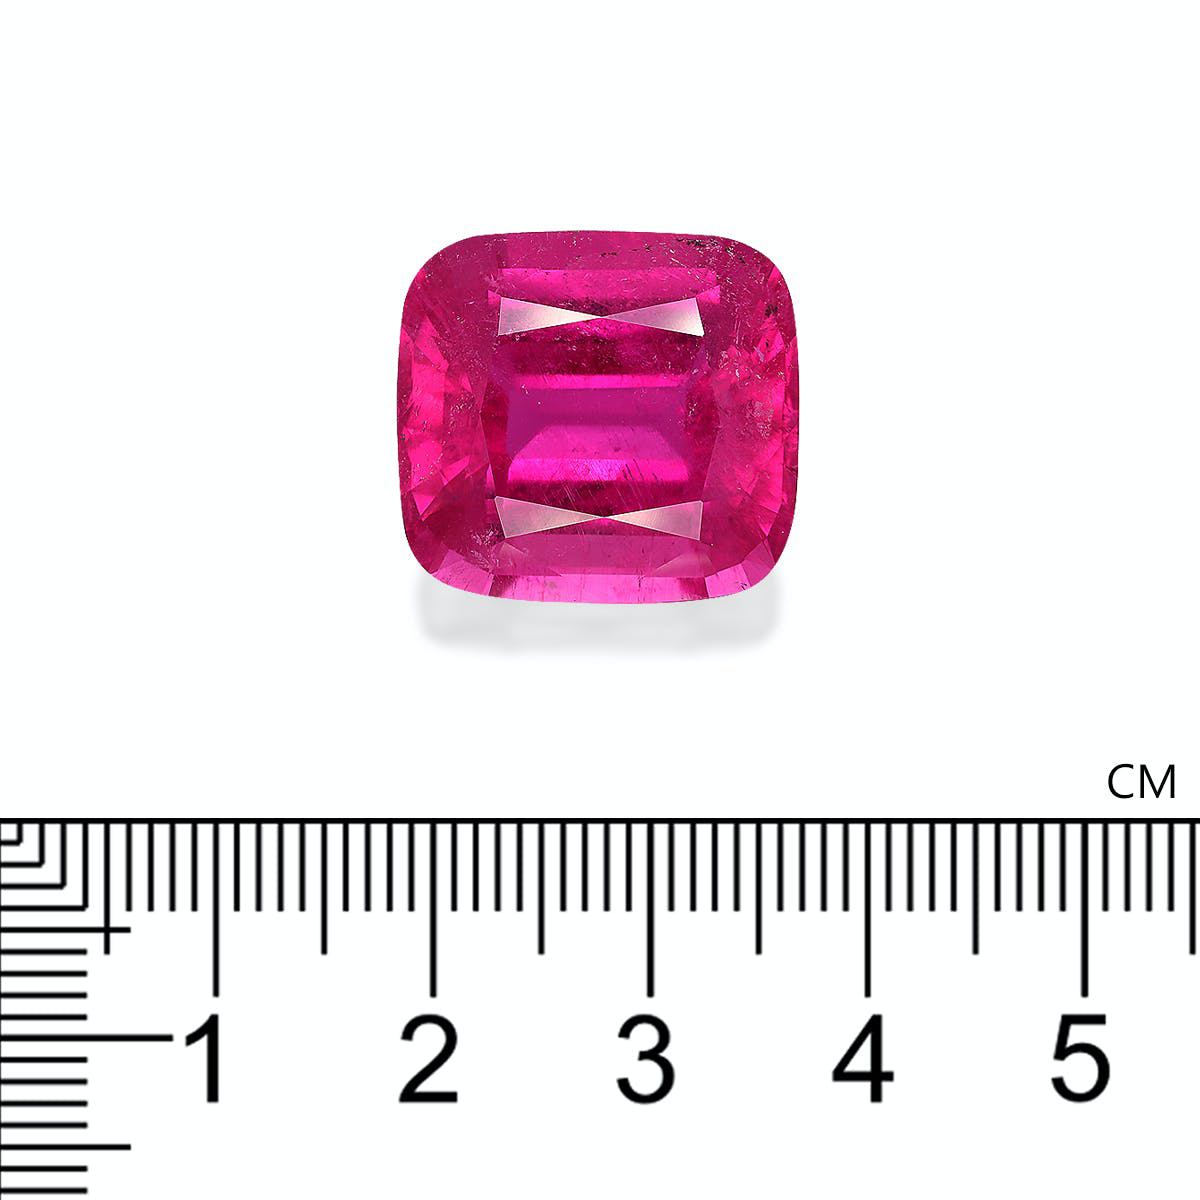 Picture of Vivid Pink Rubellite Tourmaline 25.14ct (RL1178)